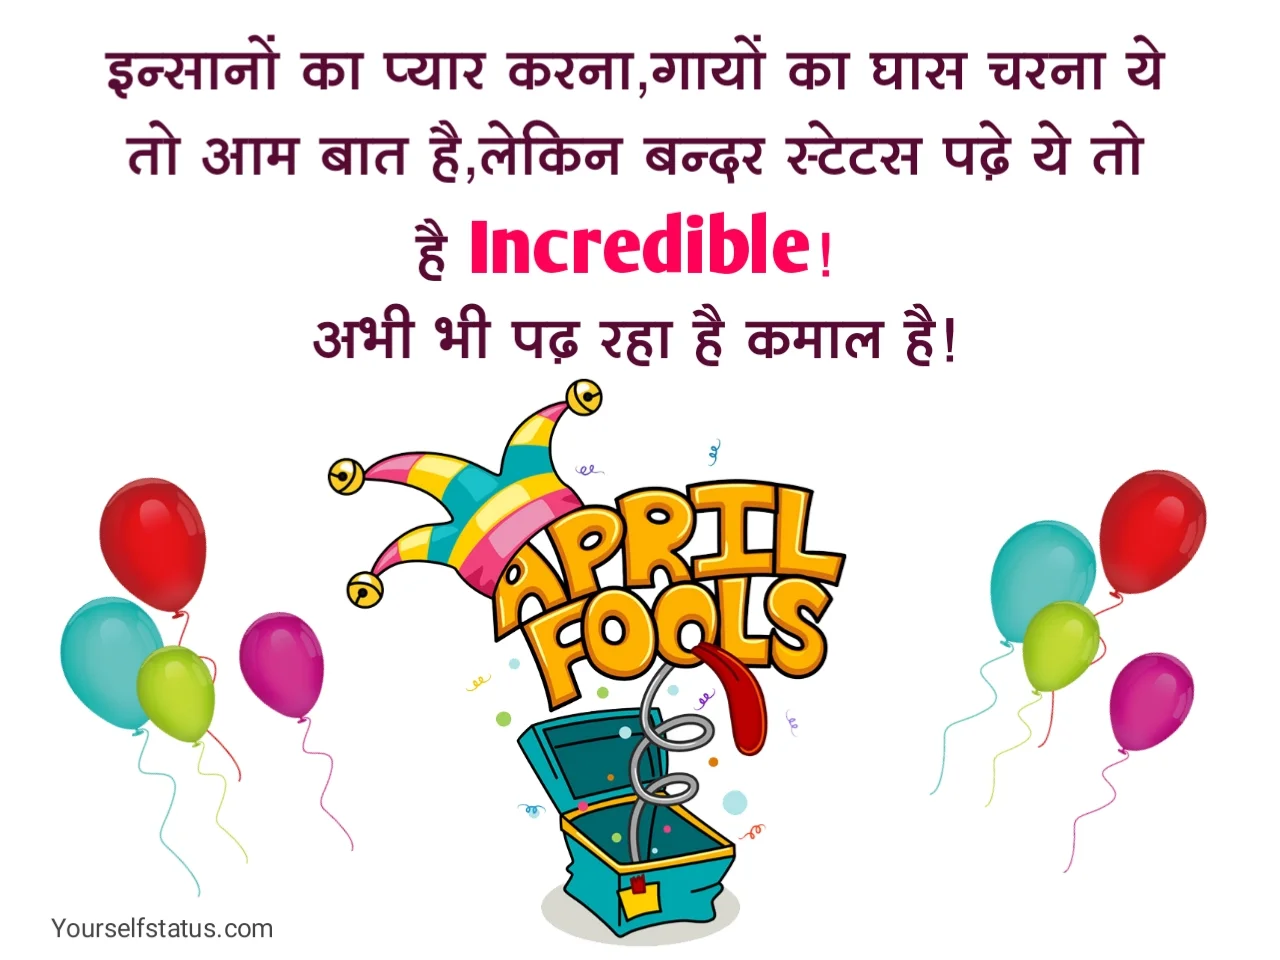 April fools day pranks jokes in hindi